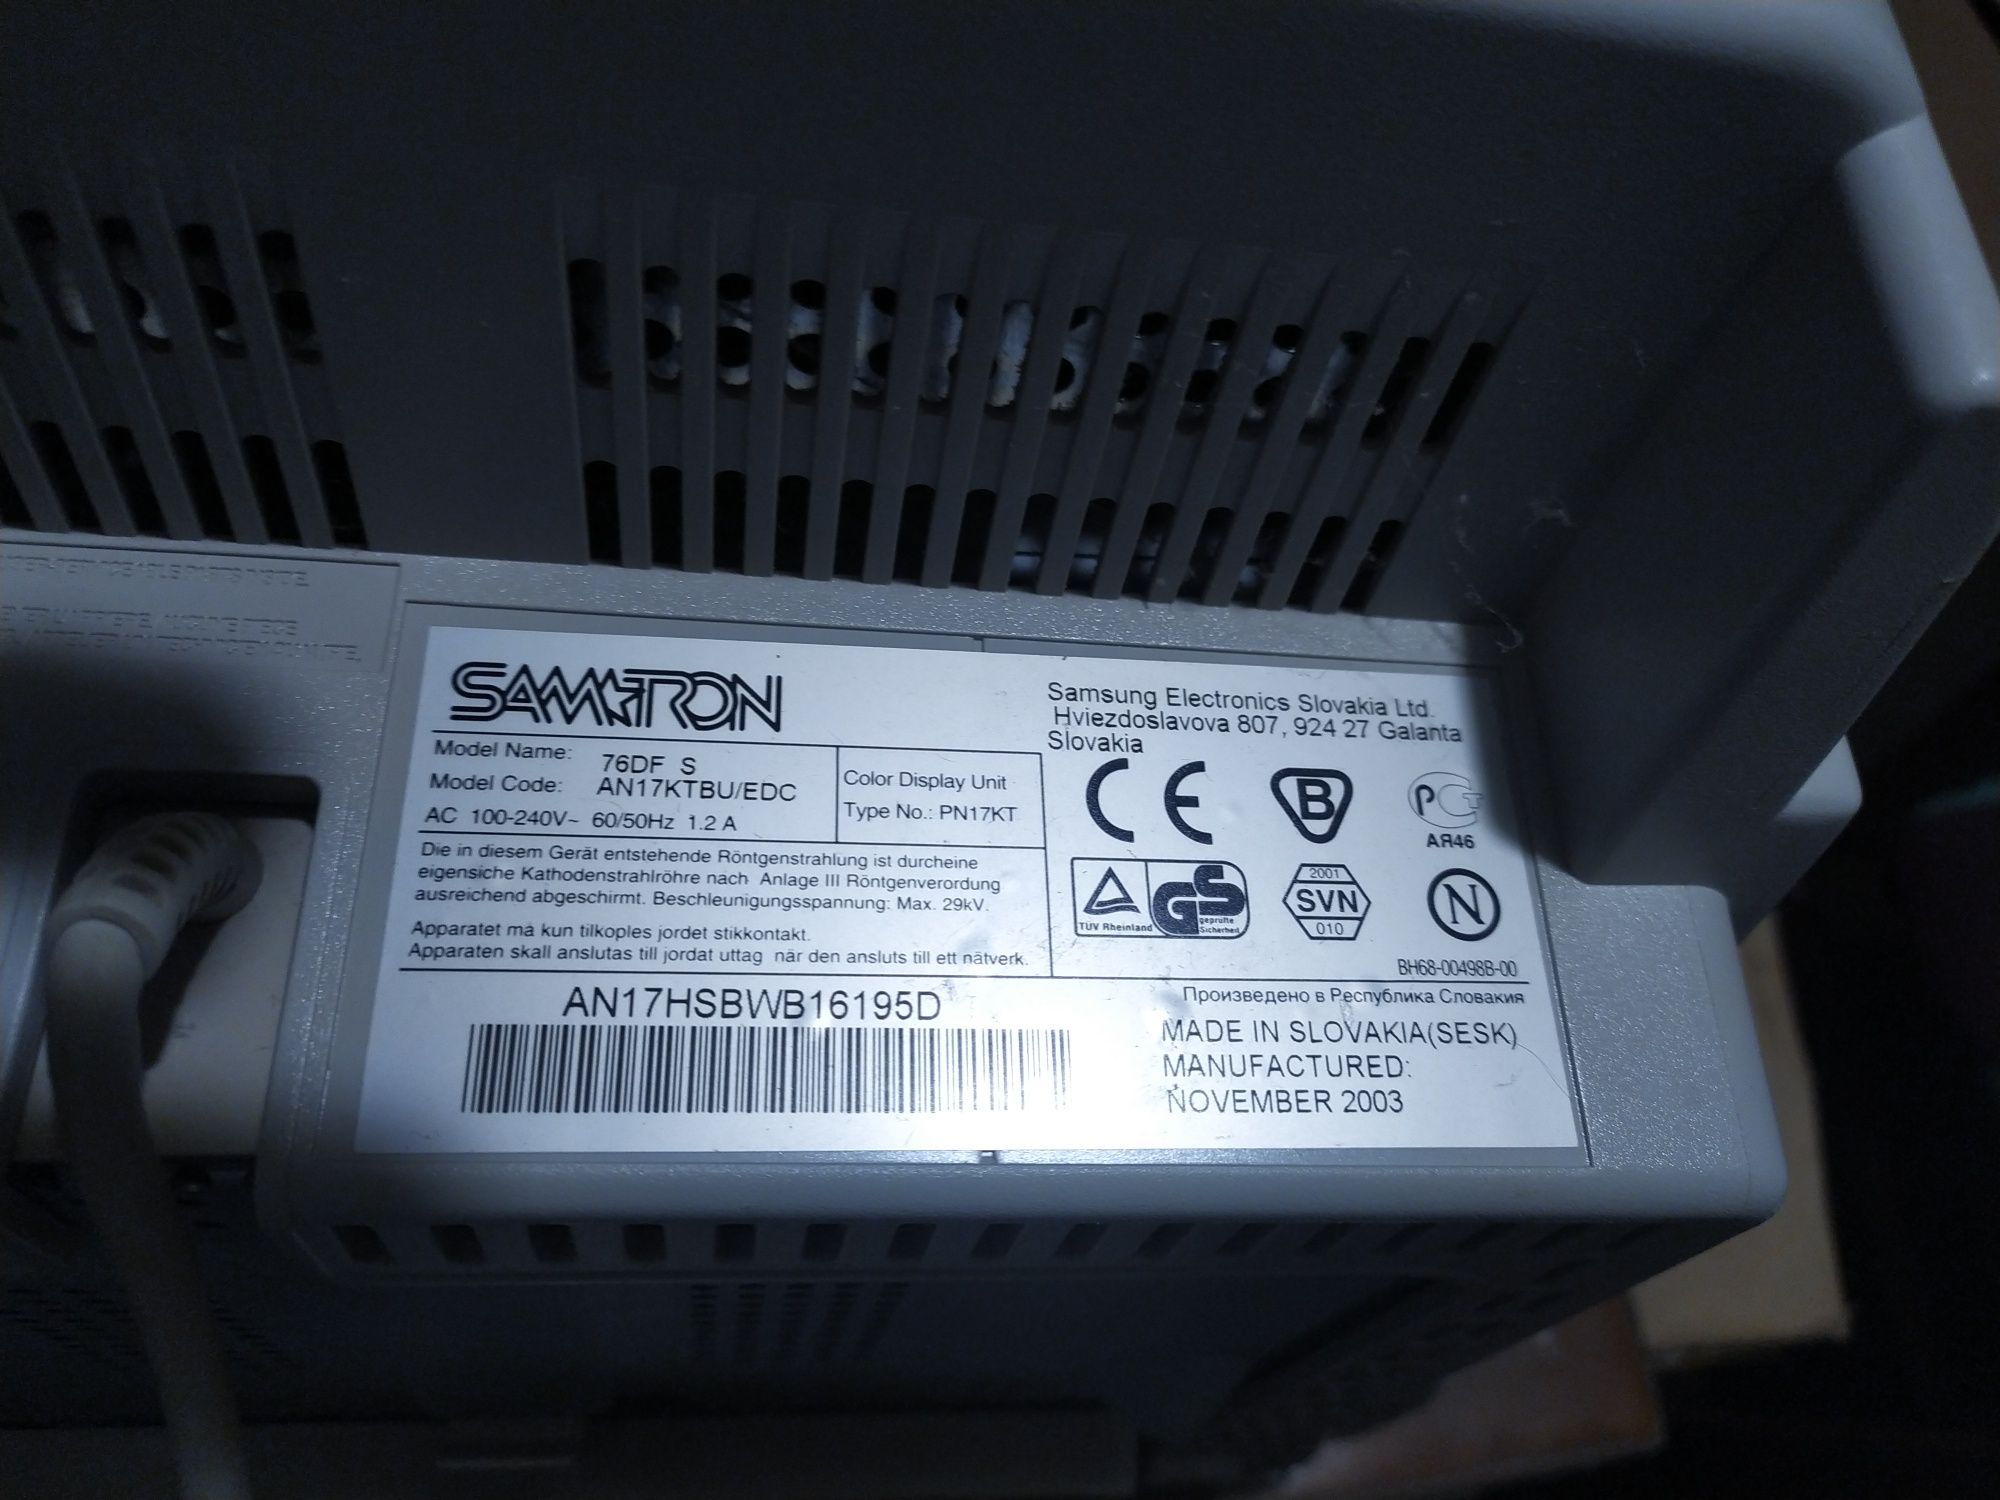 Монітори  Samsung 226 BW та Samsung SAMTRON 76 DF S